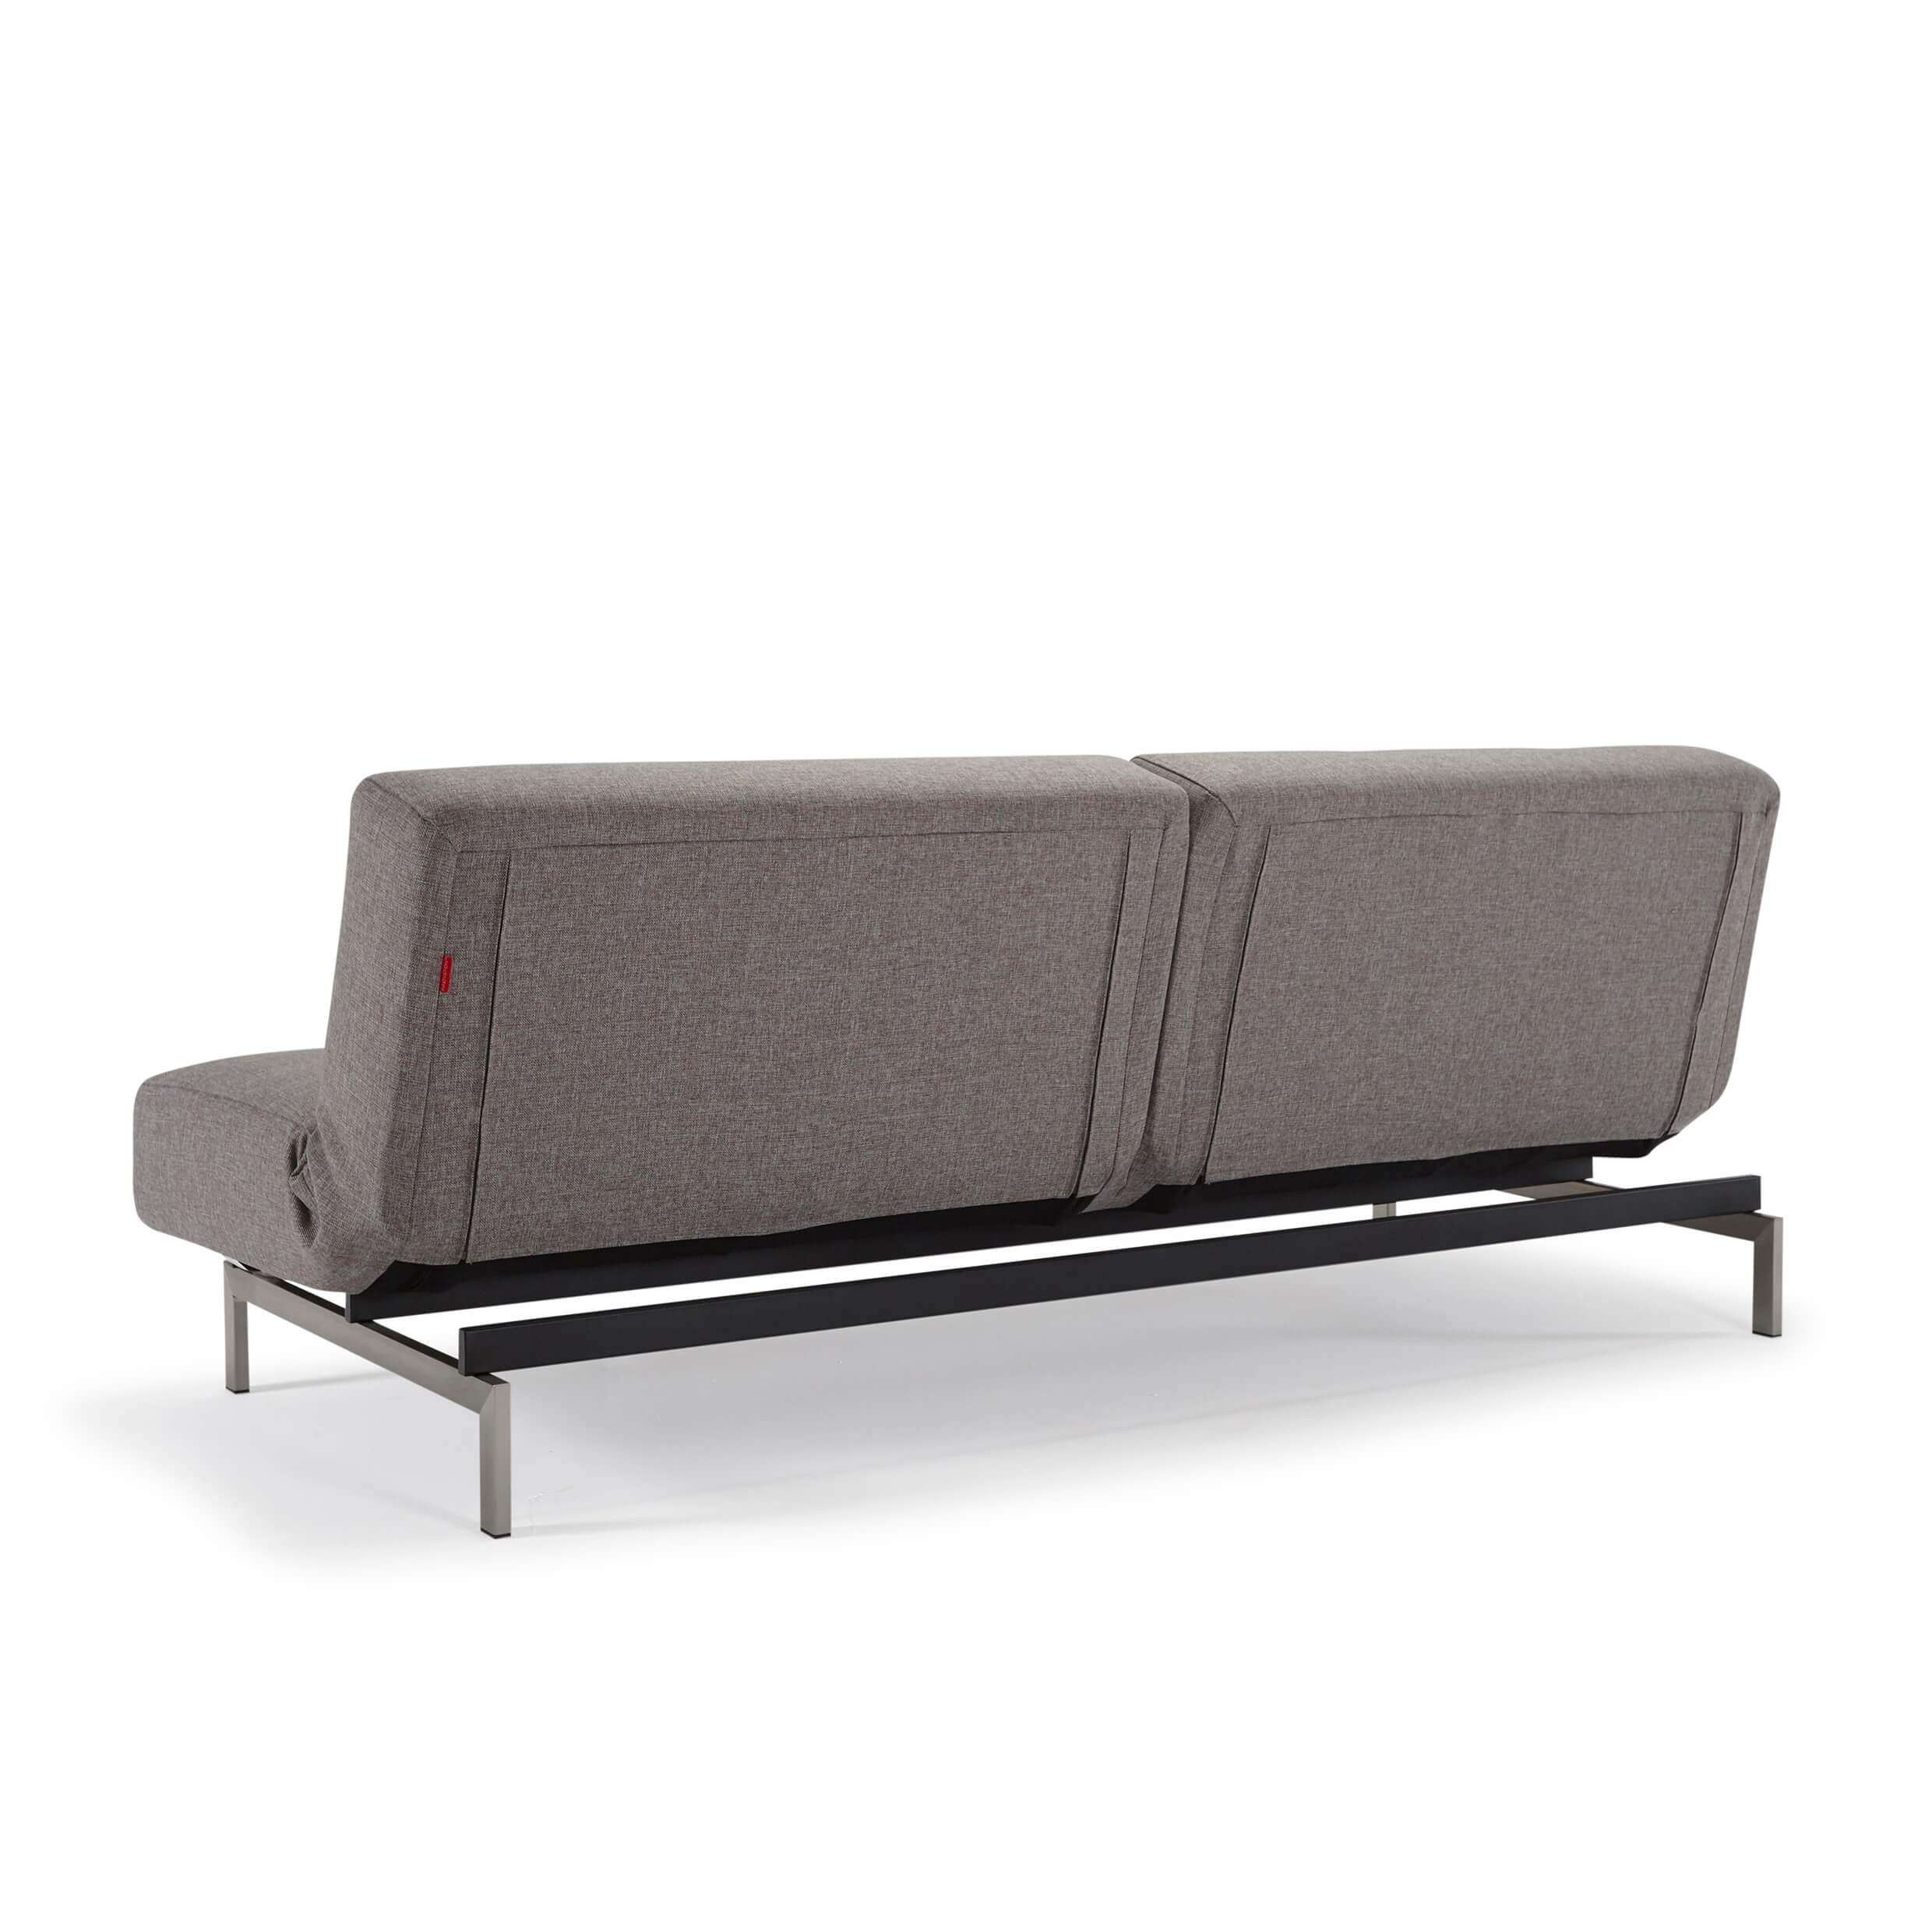 Convertible futon sofa bed rear view